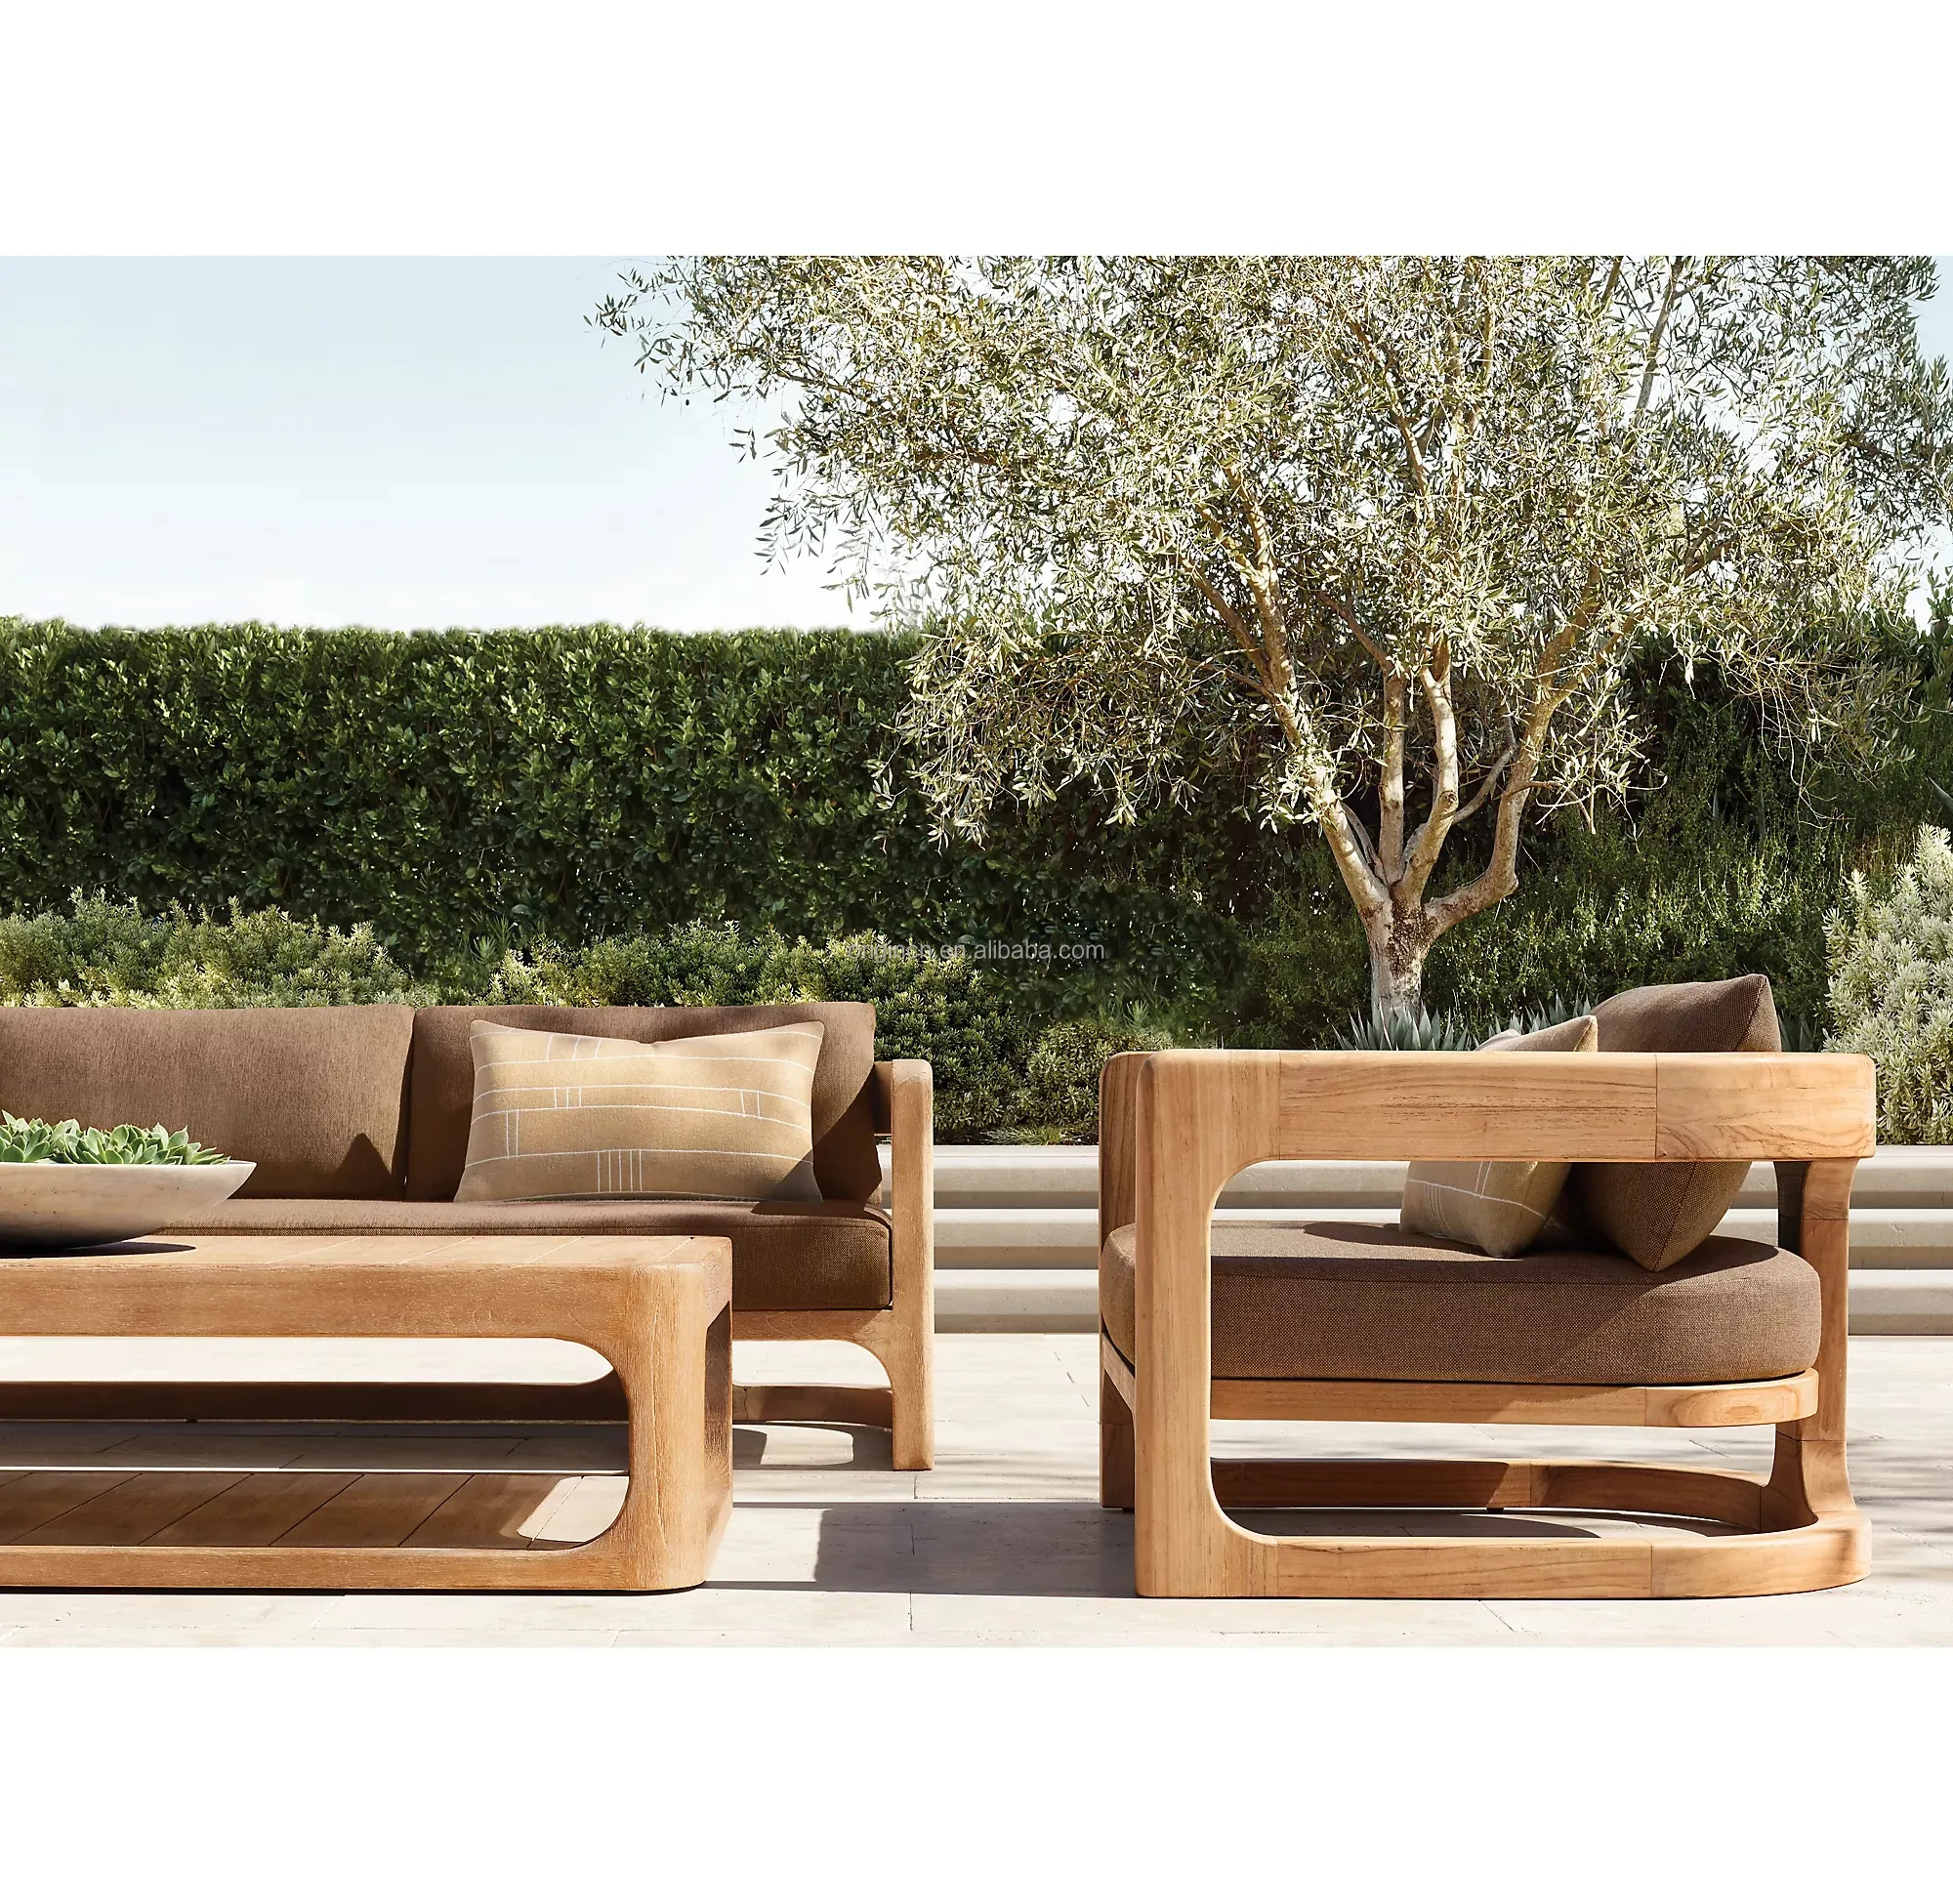 Luxus ästhetische Anziehung kraft tiefe Sitz gelegenheiten Holz Gartenmöbel moderne Teak Sofa garnitur